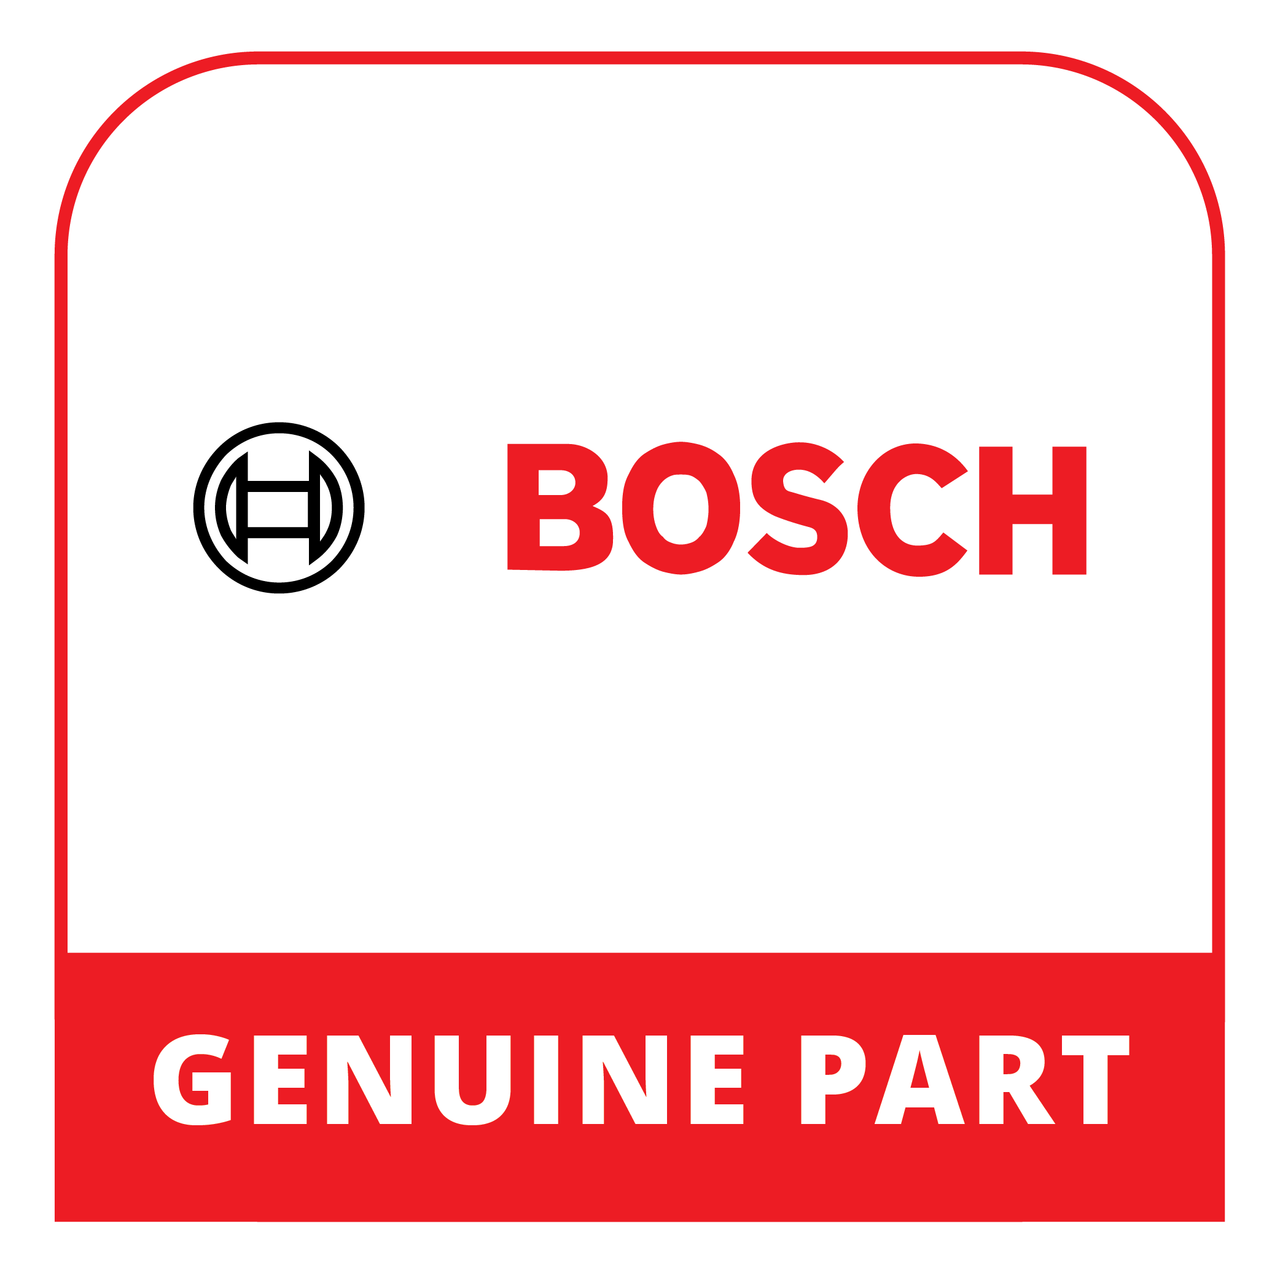 Bosch (Thermador) 00312045 - Dishwasher Salt - Genuine Bosch (Thermador) Part